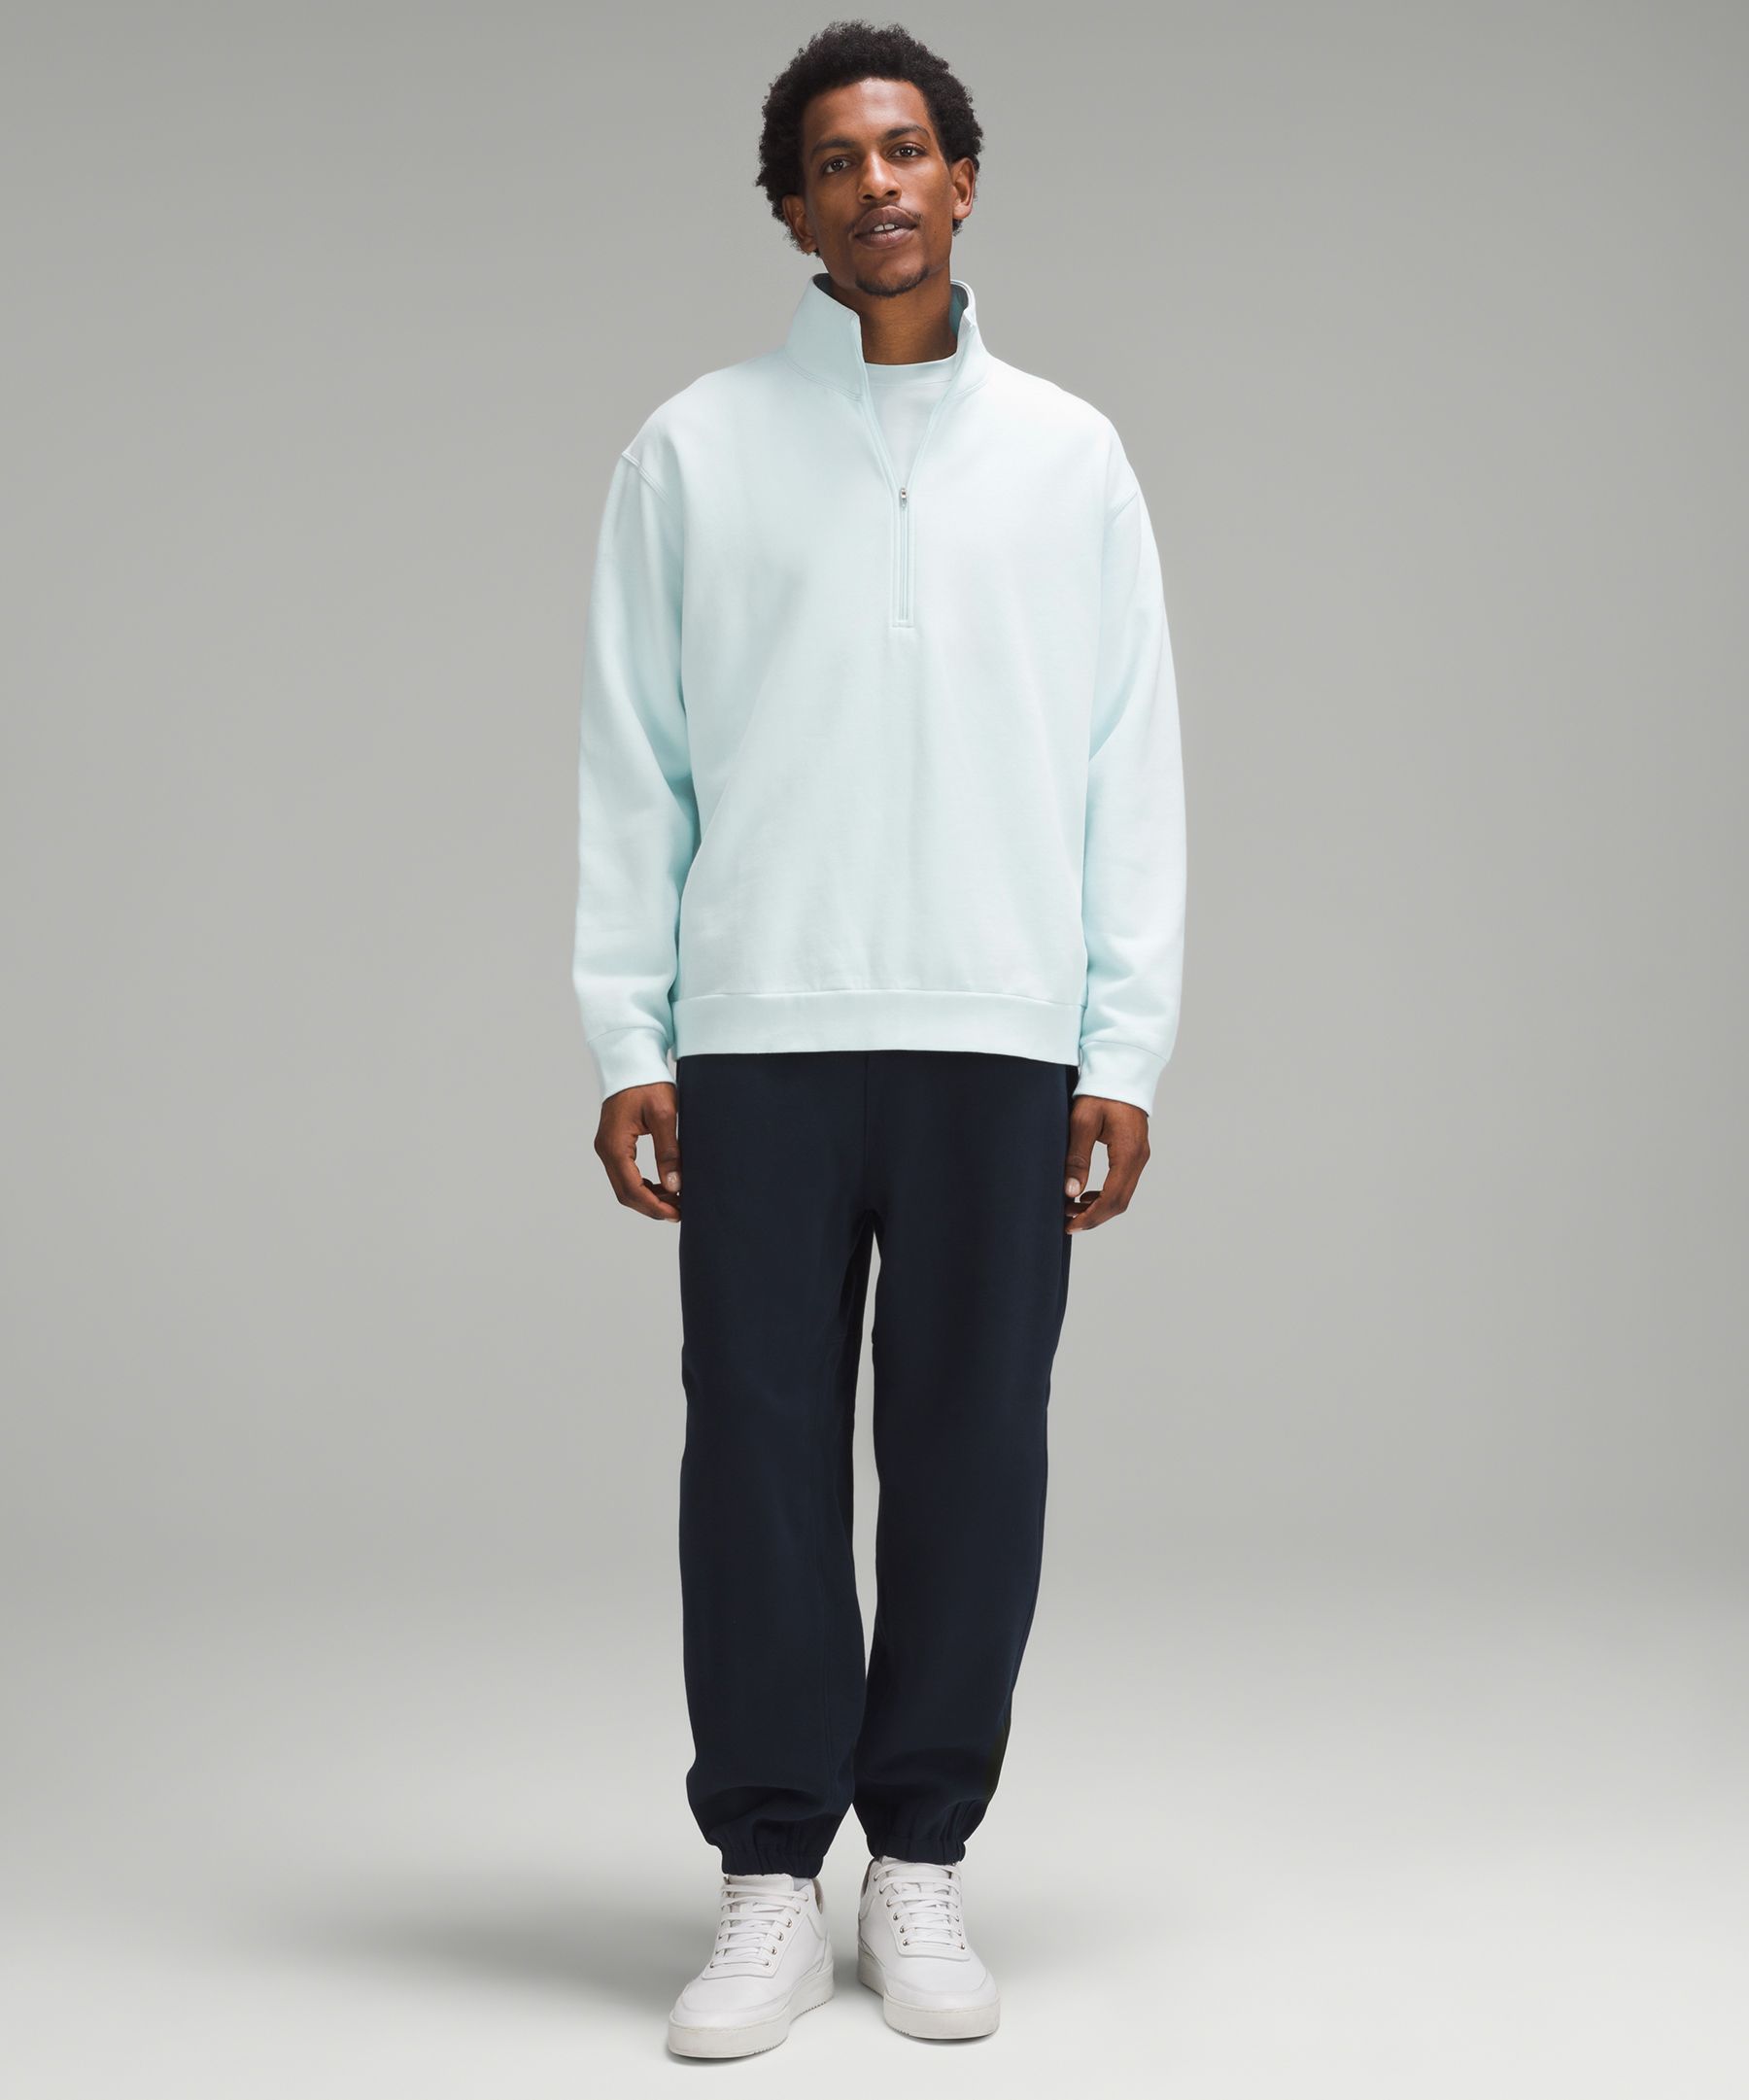 Lululemon - Steady State Cotton-Blend Jersey Half-Zip Sweatshirt